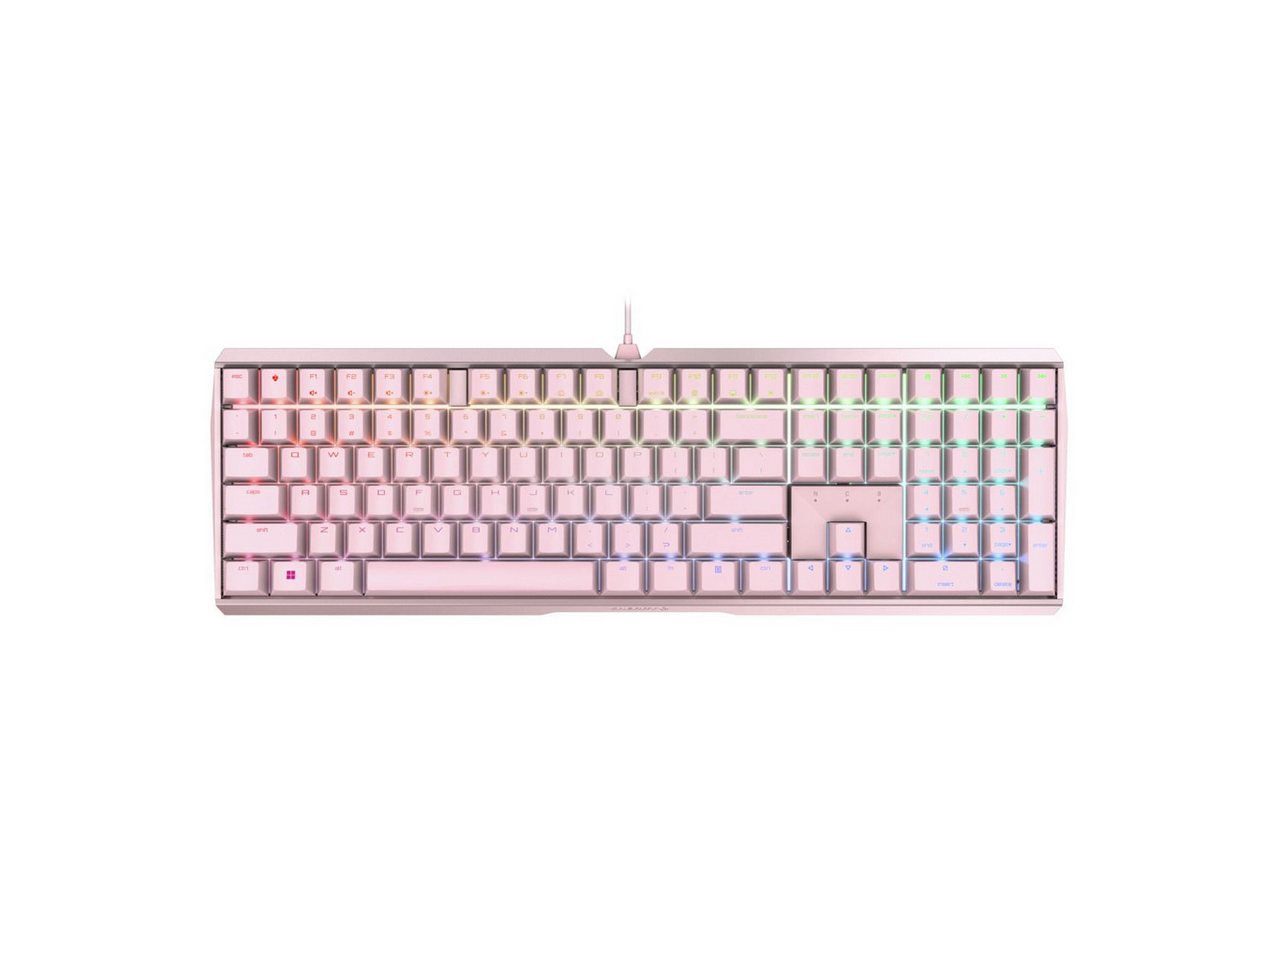 Cherry Cherry MX Board 3.0S Gaming RGB Tastatur, MX-Blue, pink Gaming-Tastatur von Cherry